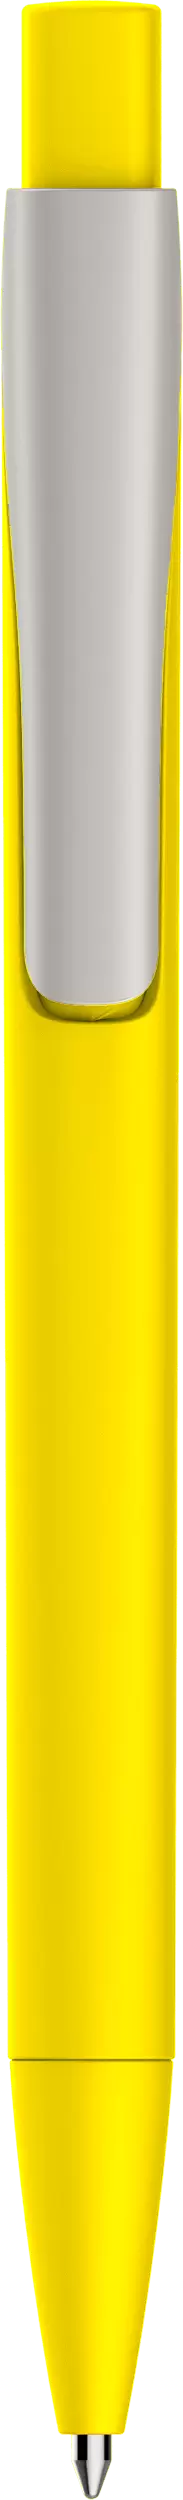 Ручка MASTER SOFT Желтая 1040-04